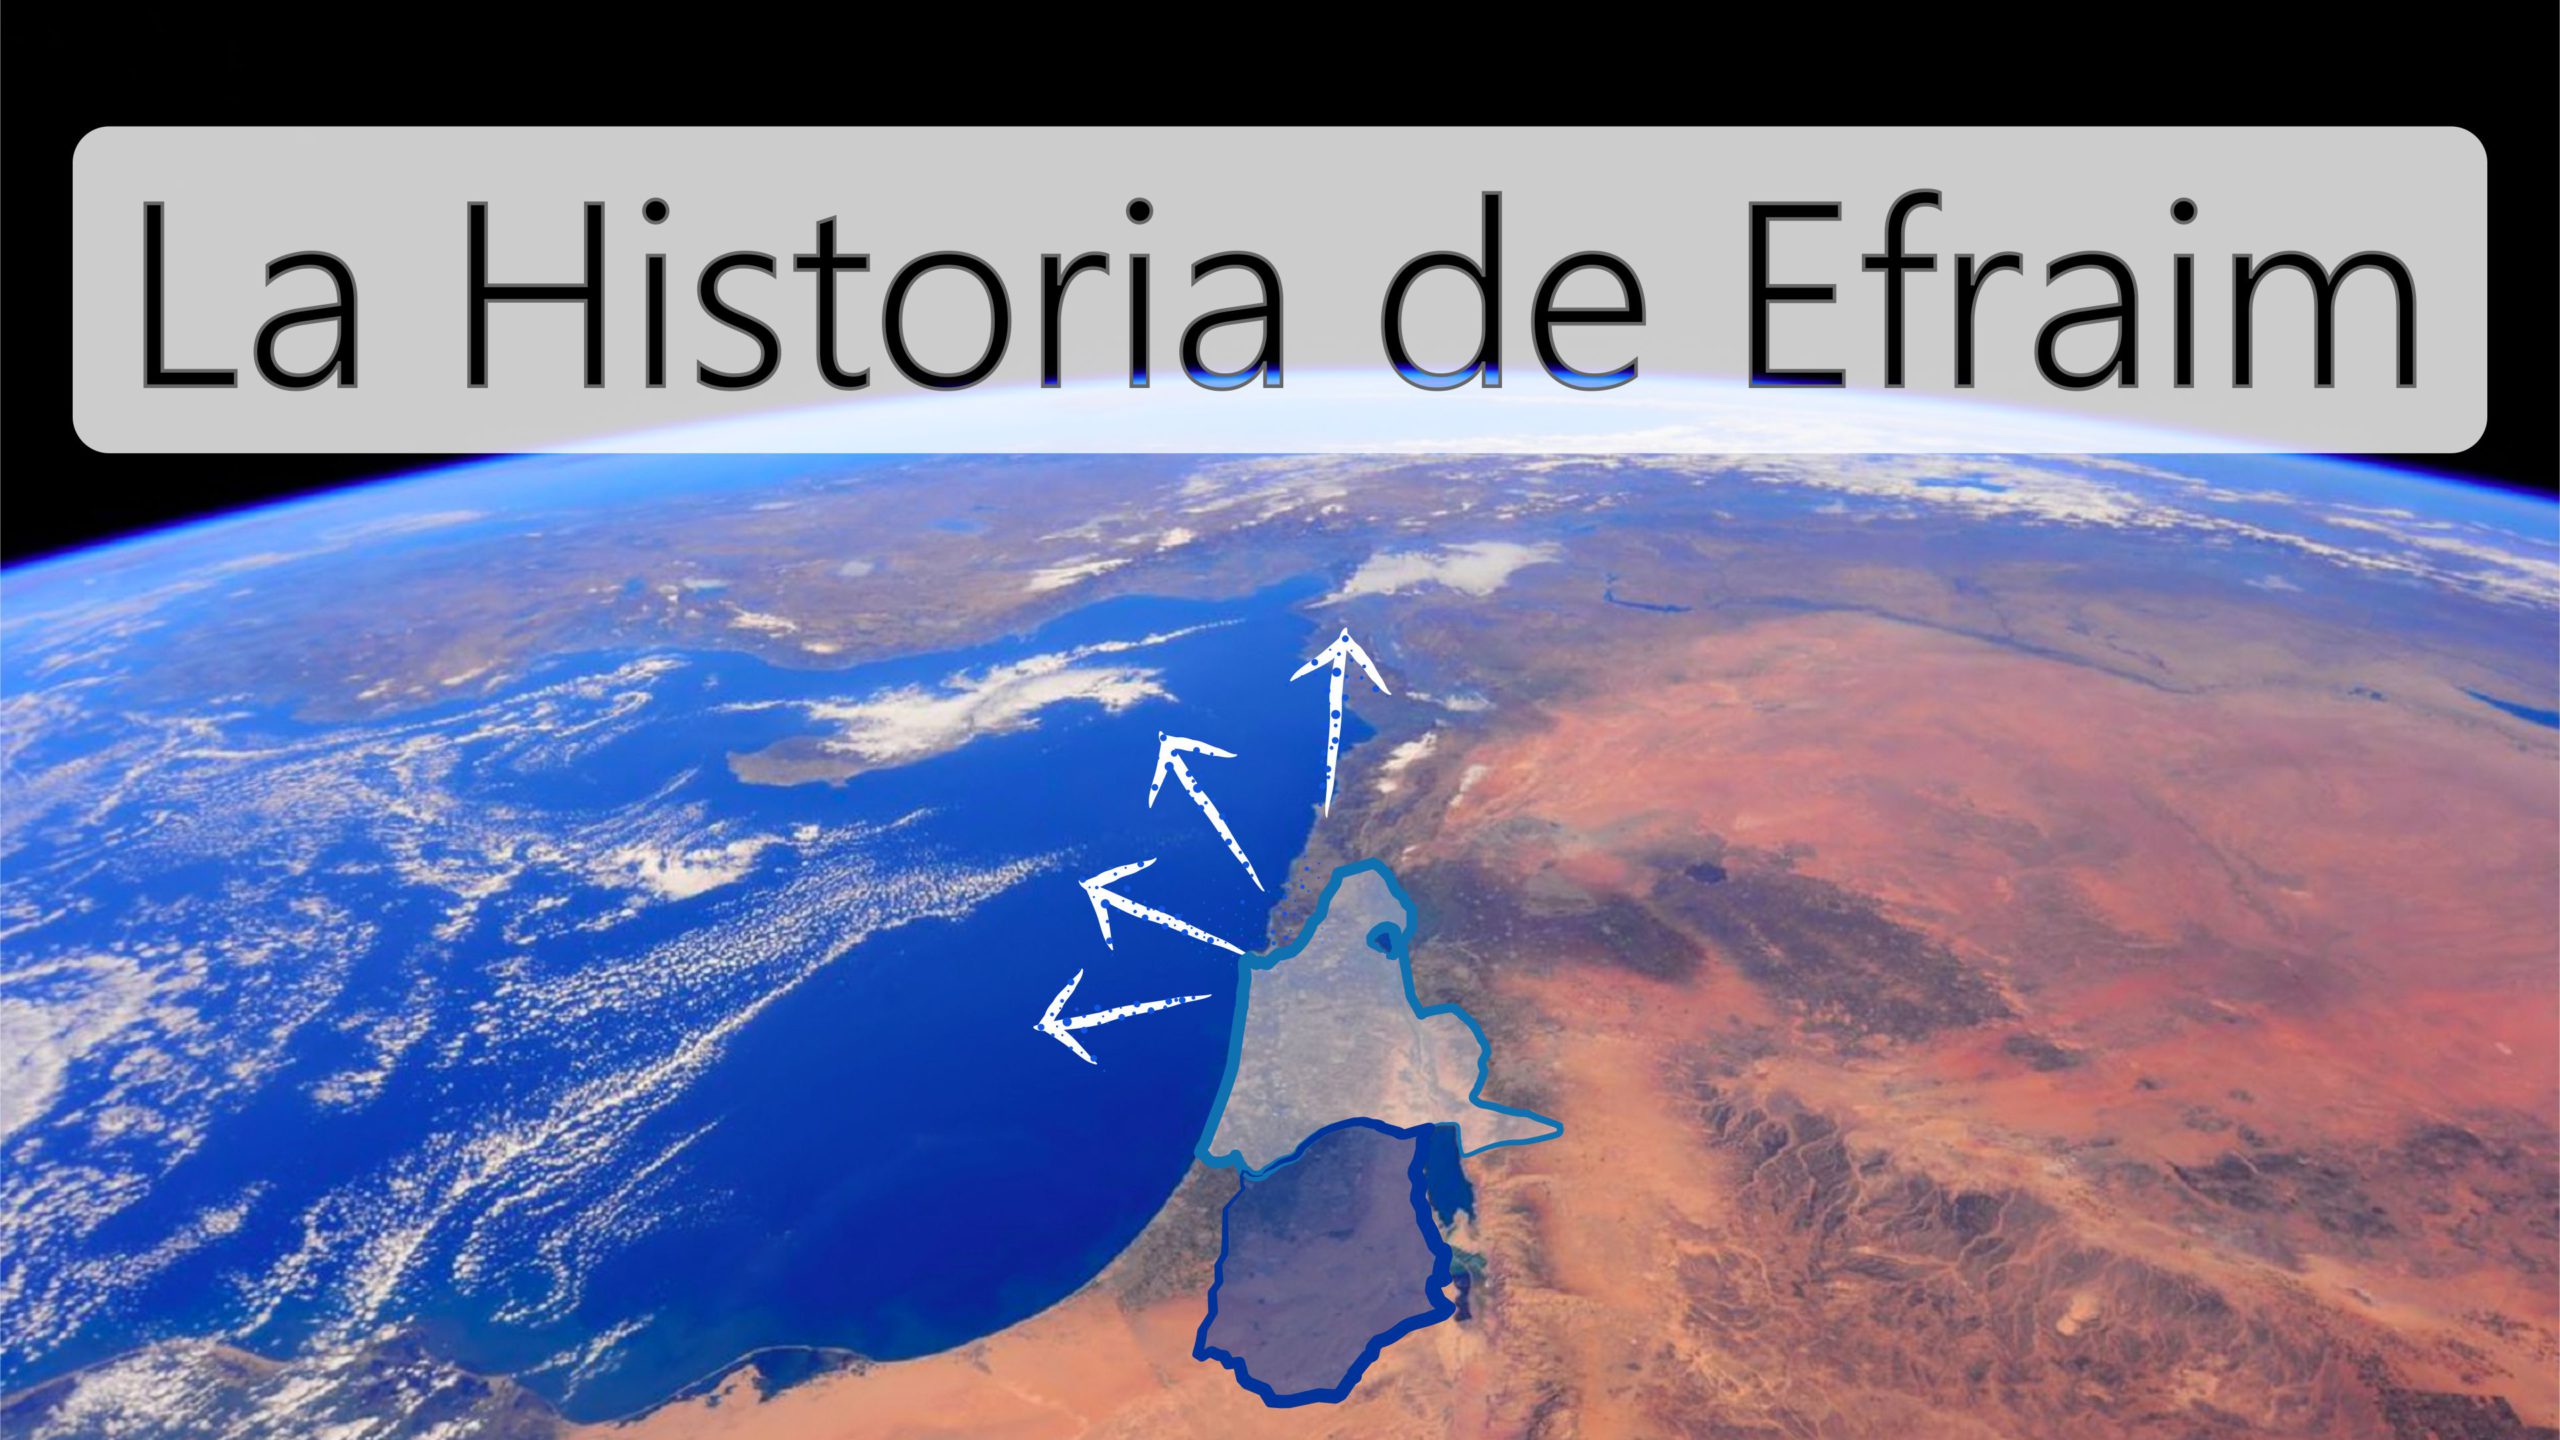 La Historia de Efraim